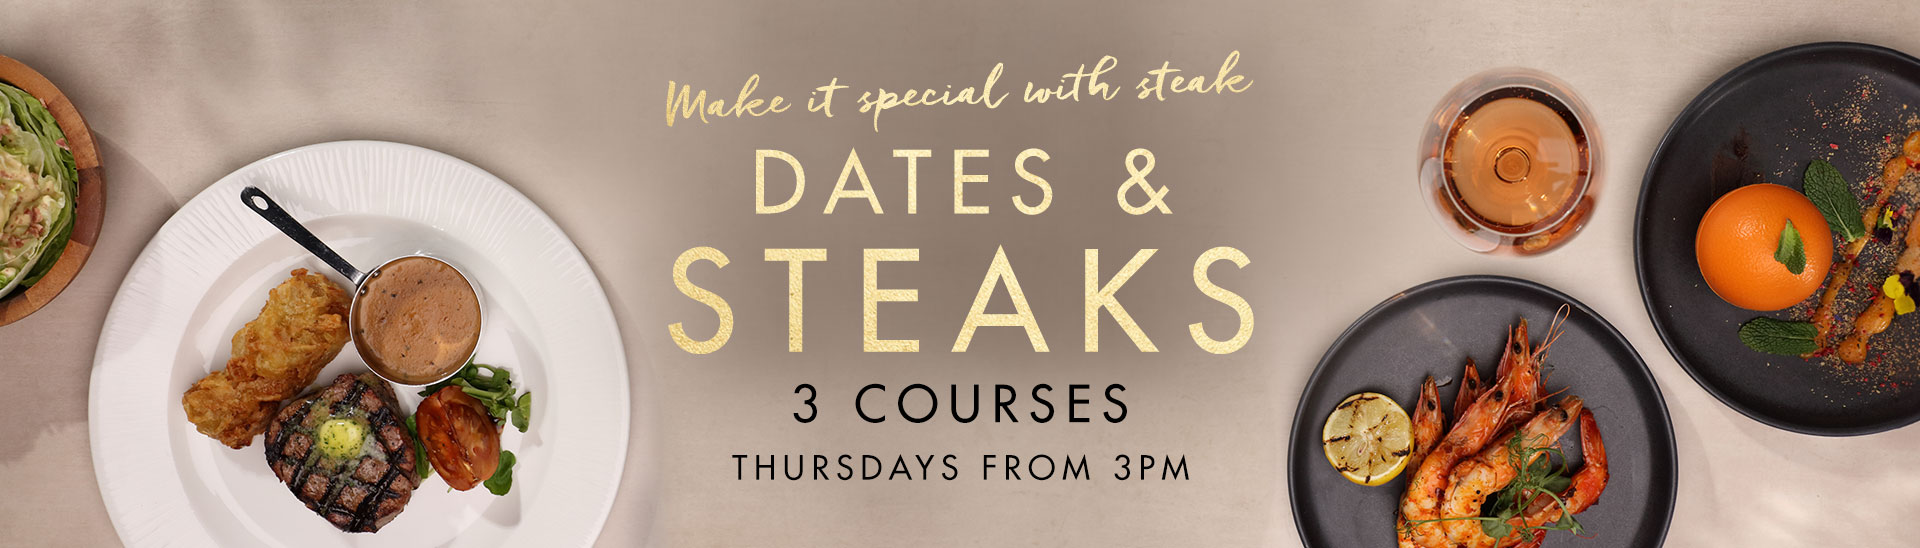 Dates & Steaks at Miller & Carter Milton Keynes